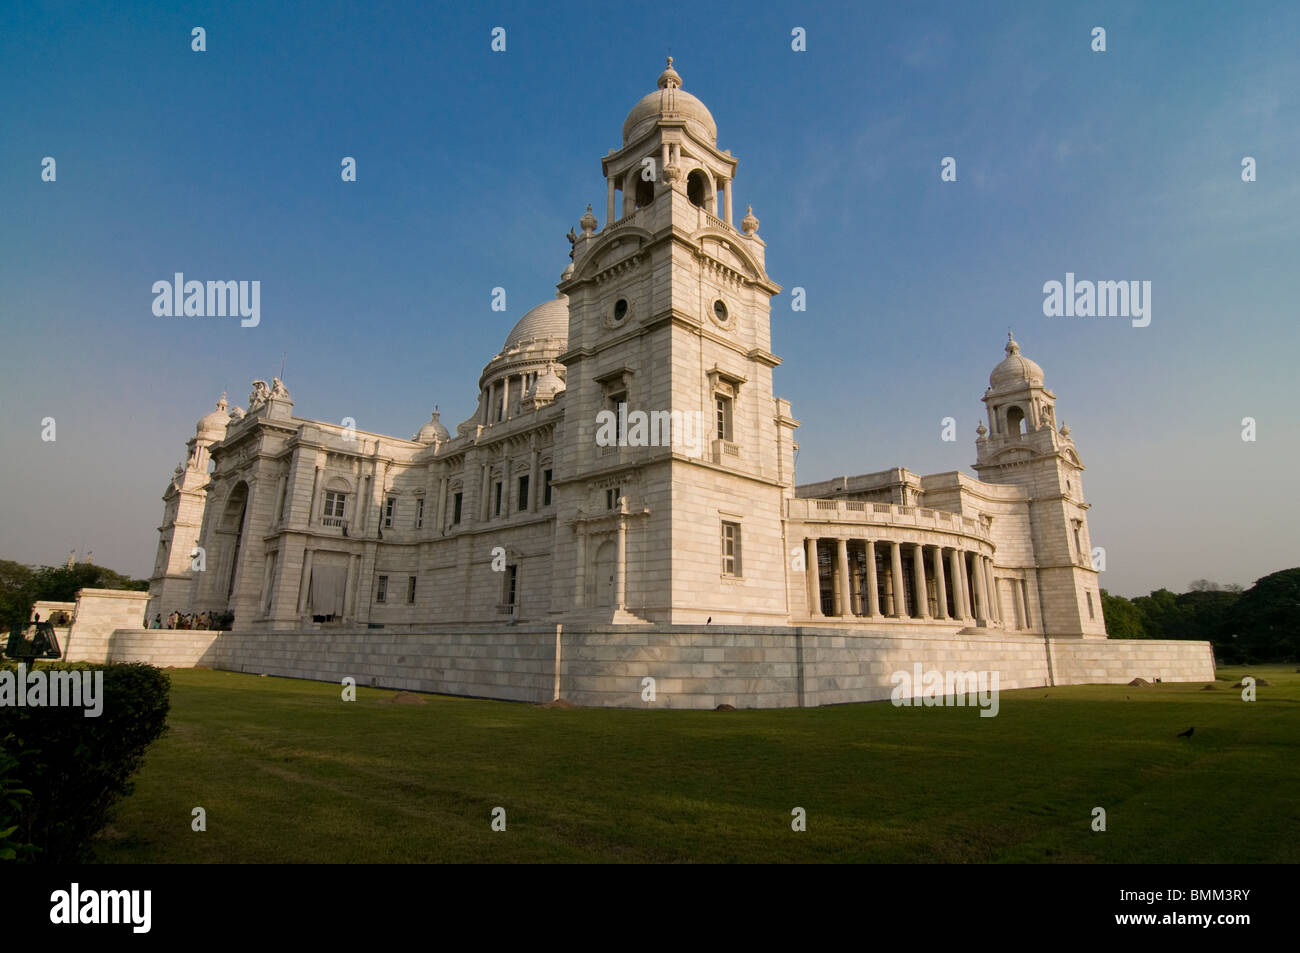 Imposantes Victoria Monument. Kalkutta. Inde * Victoria imposant monument. Calcutta. L'Inde. Banque D'Images